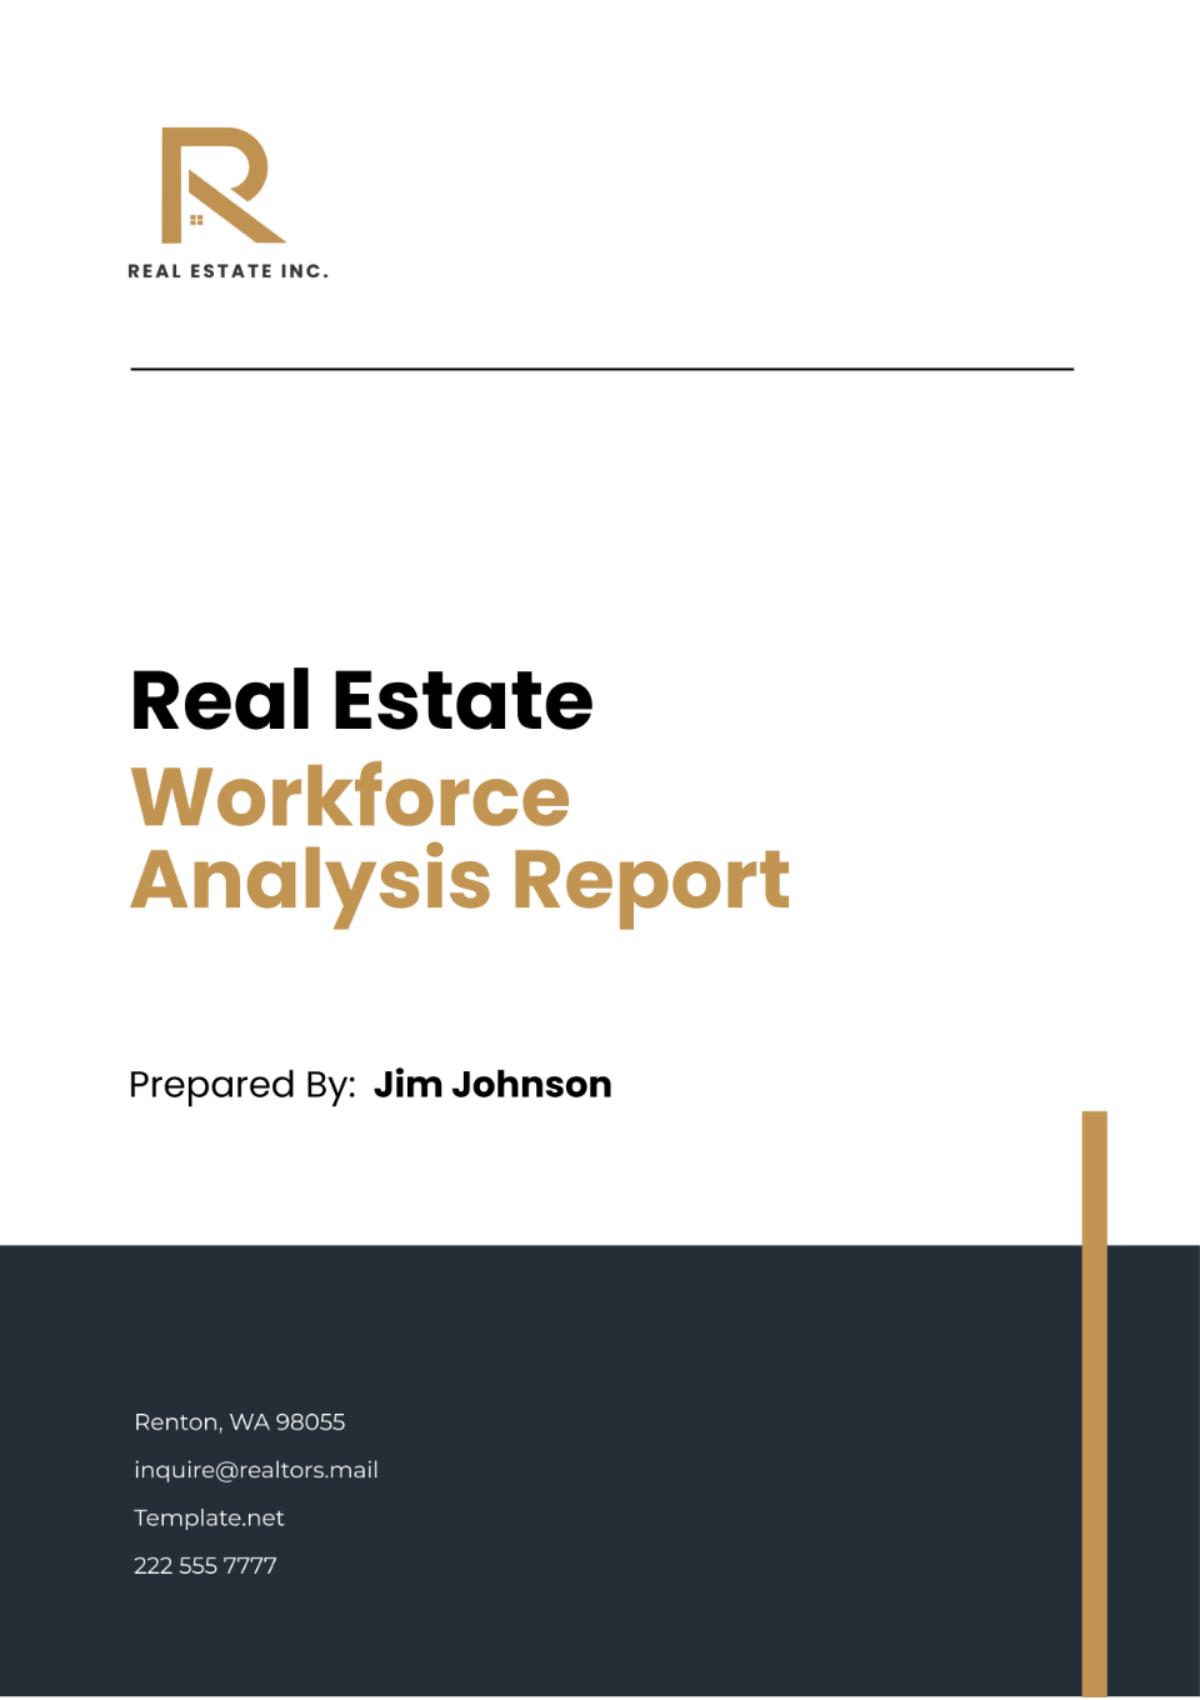 Real Estate Workforce Analysis Report Template